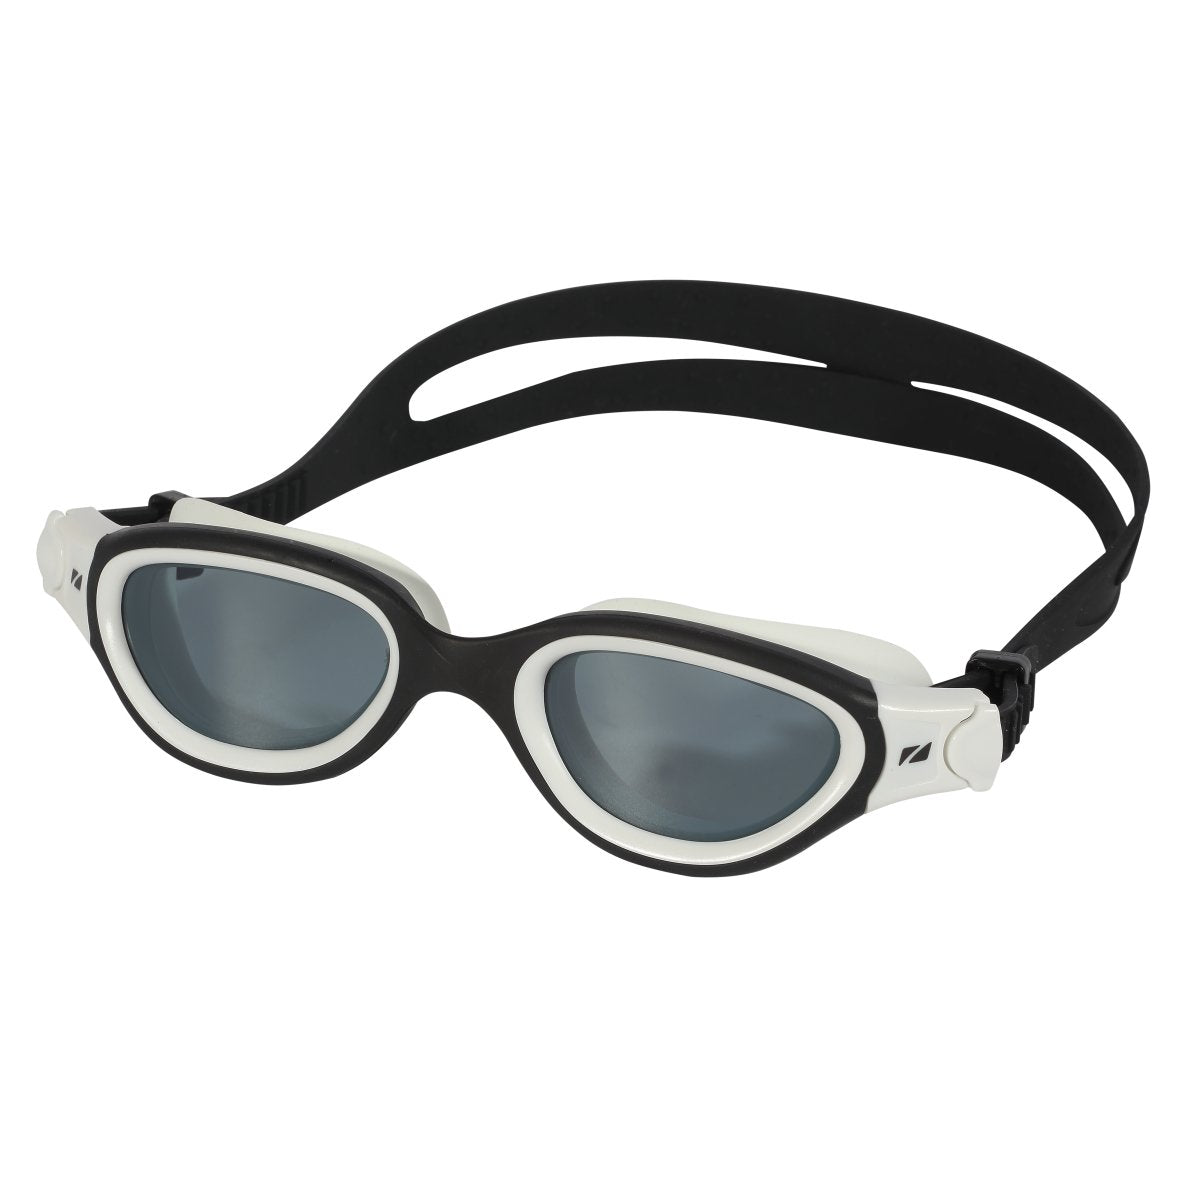 Venator-X Swim Goggles in Black & White - Paddle People